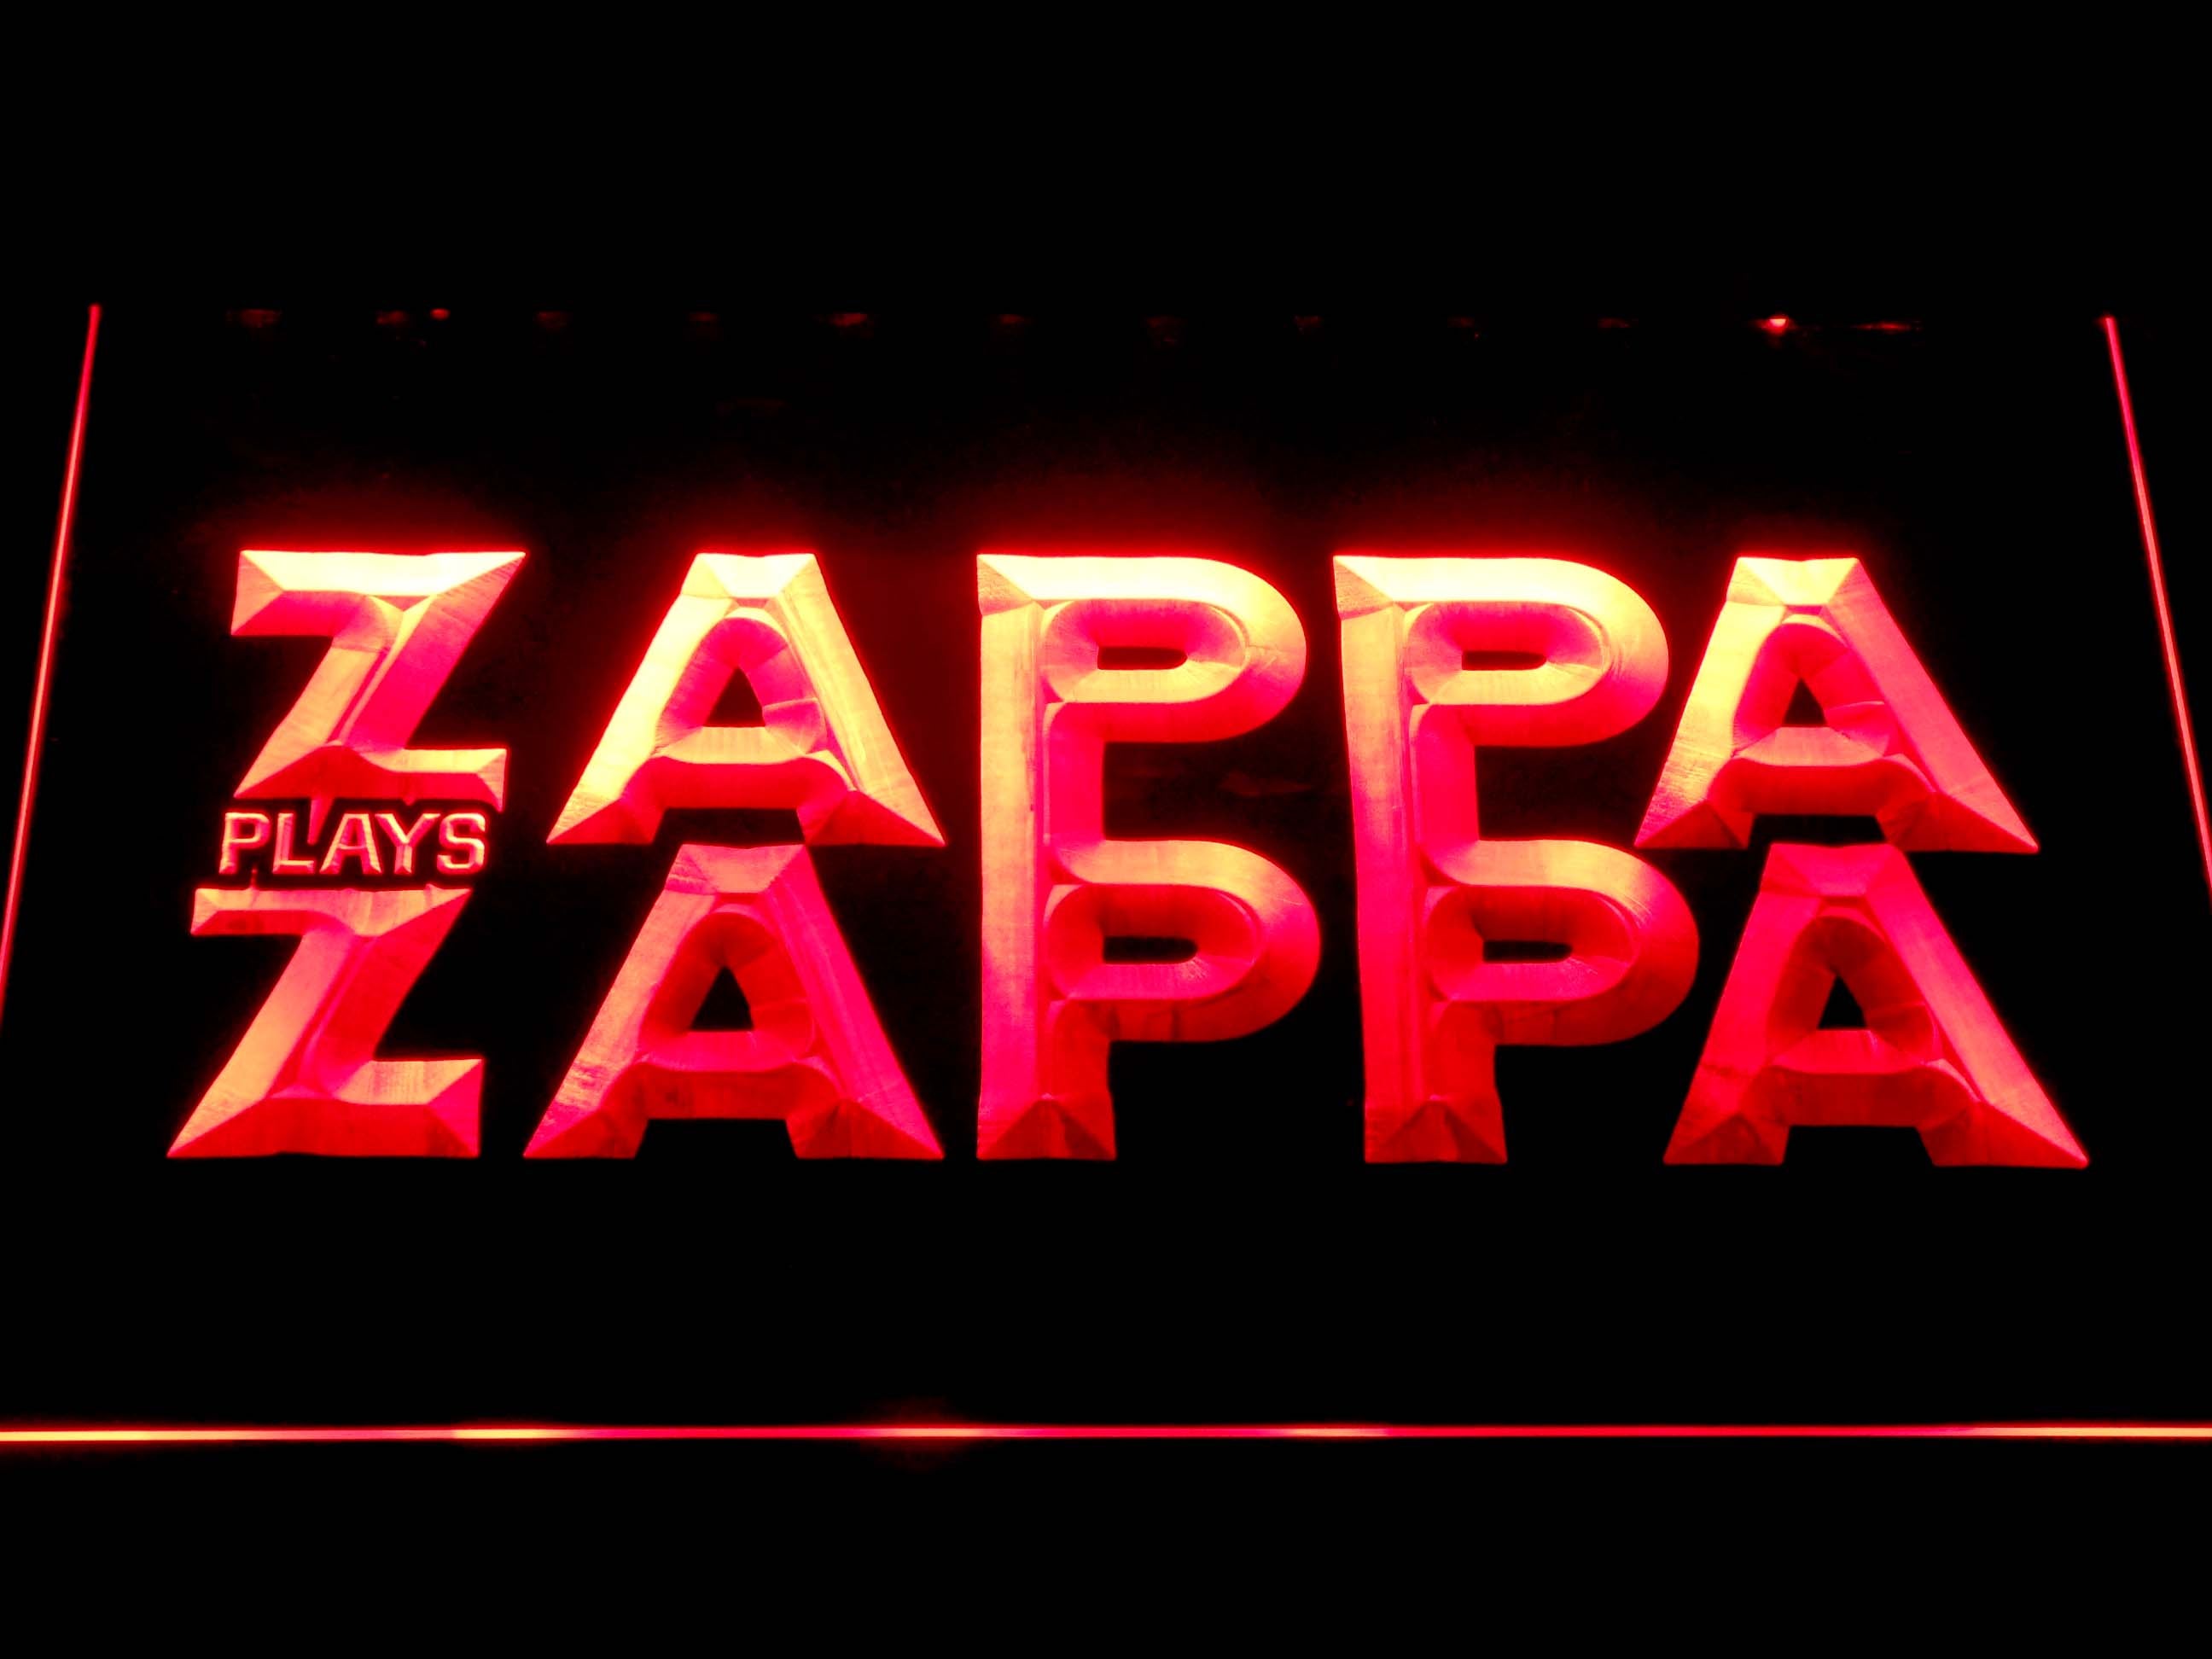 Zappa Plays Zappa Band LED Neon Sign